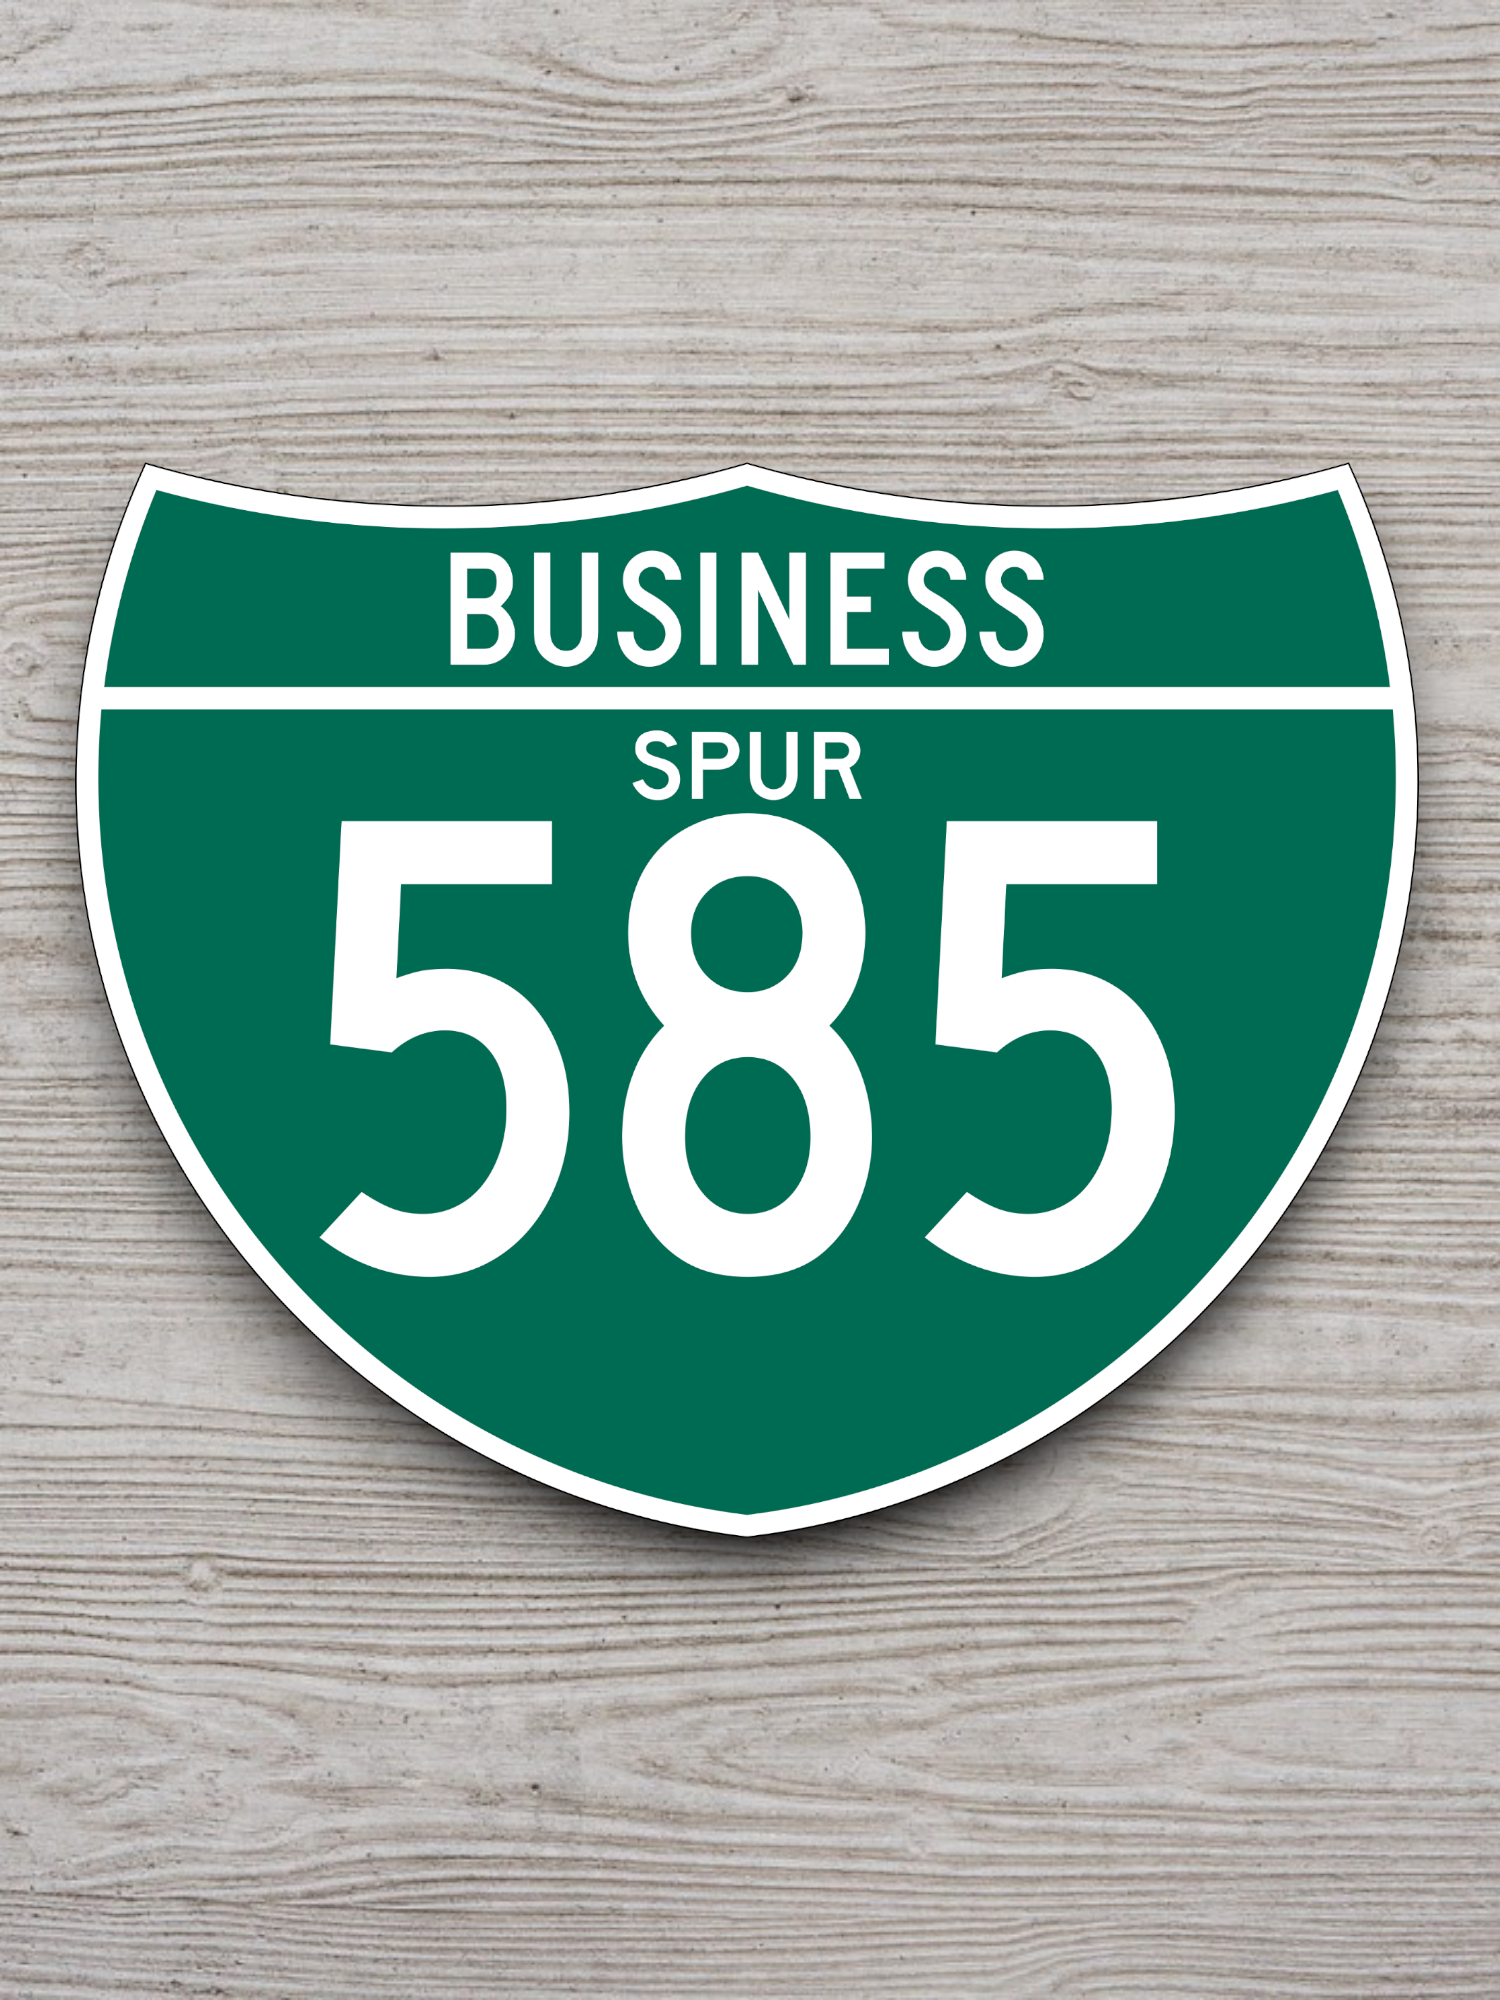 Business Spur 585 Road Sign Sticker